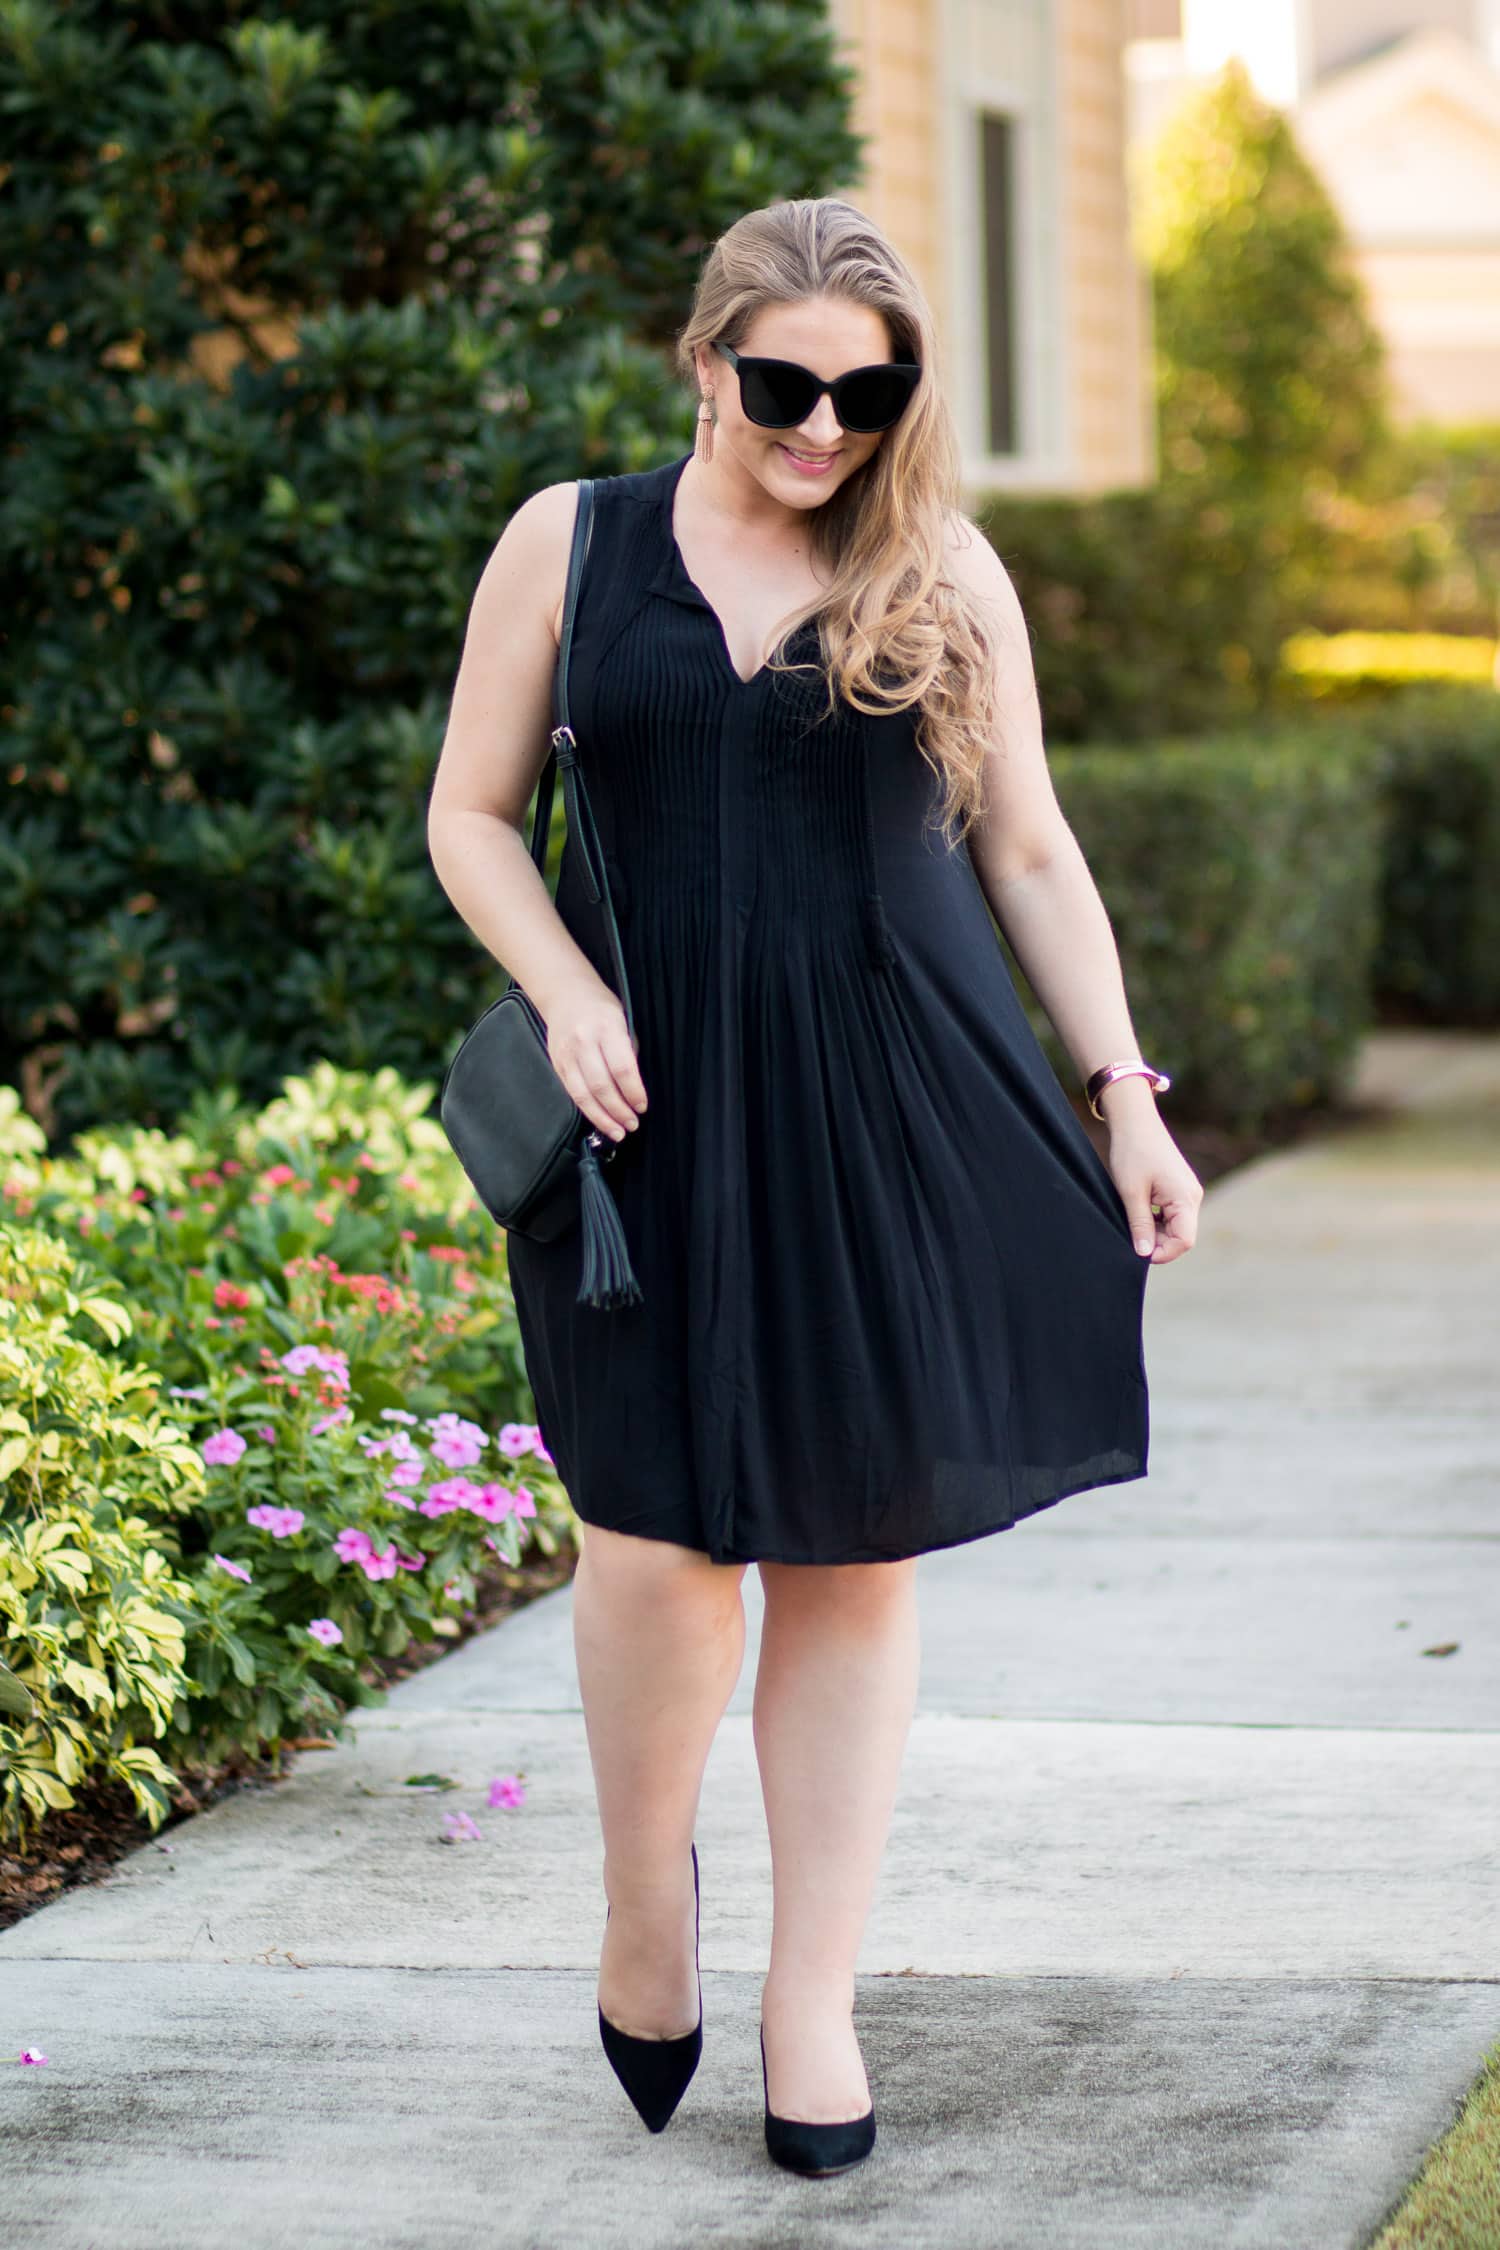 maternity style polka dot sun dress black heels zappos shoes | Ashley Brooke Nicholas Florida style blogger | marc fisher